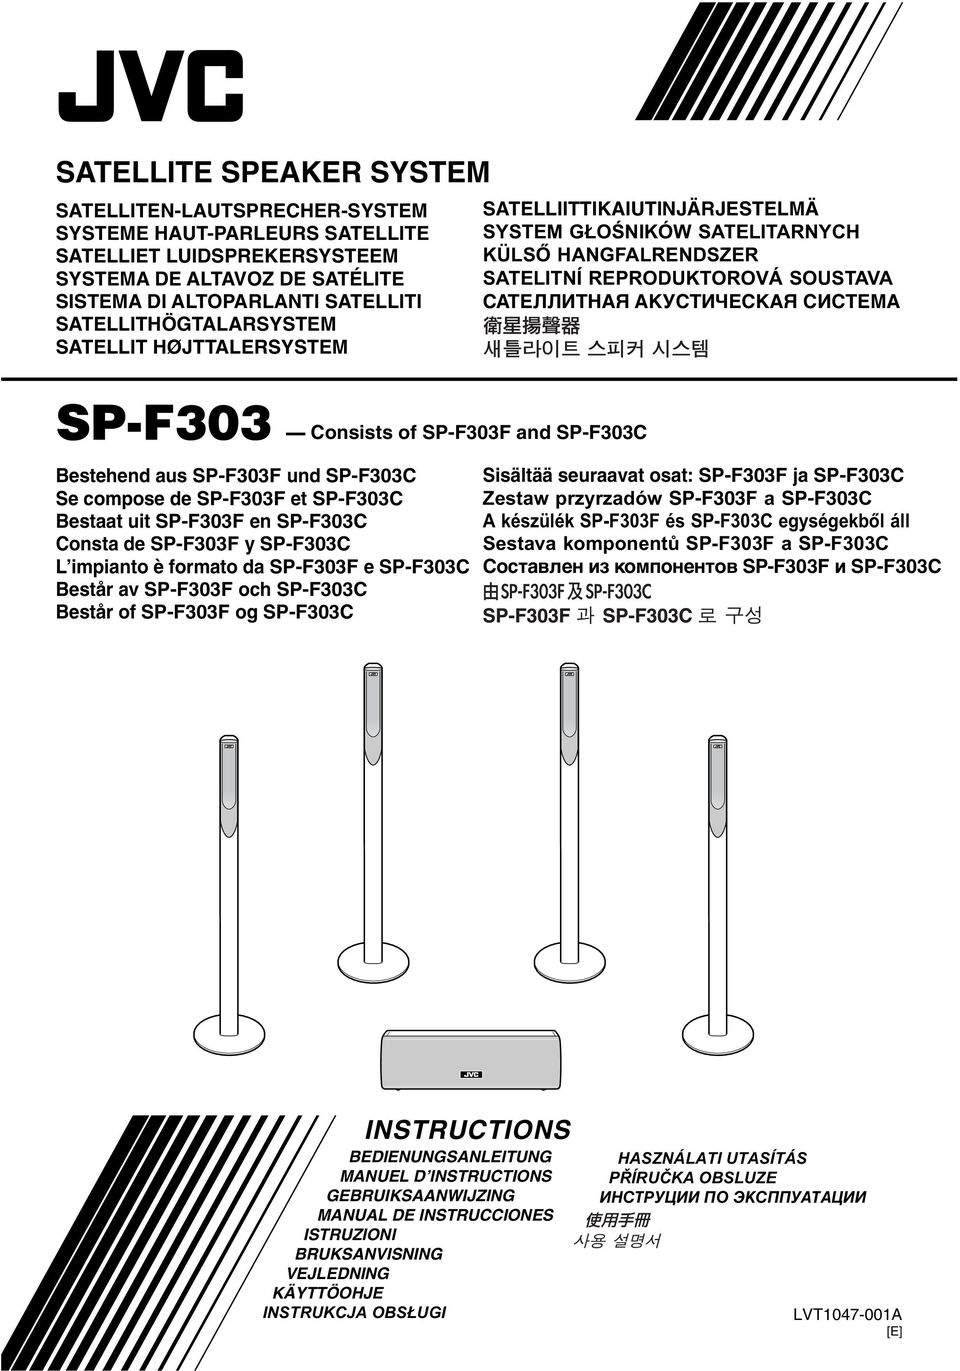 SP-F303 Consists of SP-F303F and SP-F303C Bestehend aus SP-F303F und SP-F303C Se compose de SP-F303F et SP-F303C Bestaat uit SP-F303F en SP-F303C Consta de SP-F303F y SP-F303C L impianto è formato da